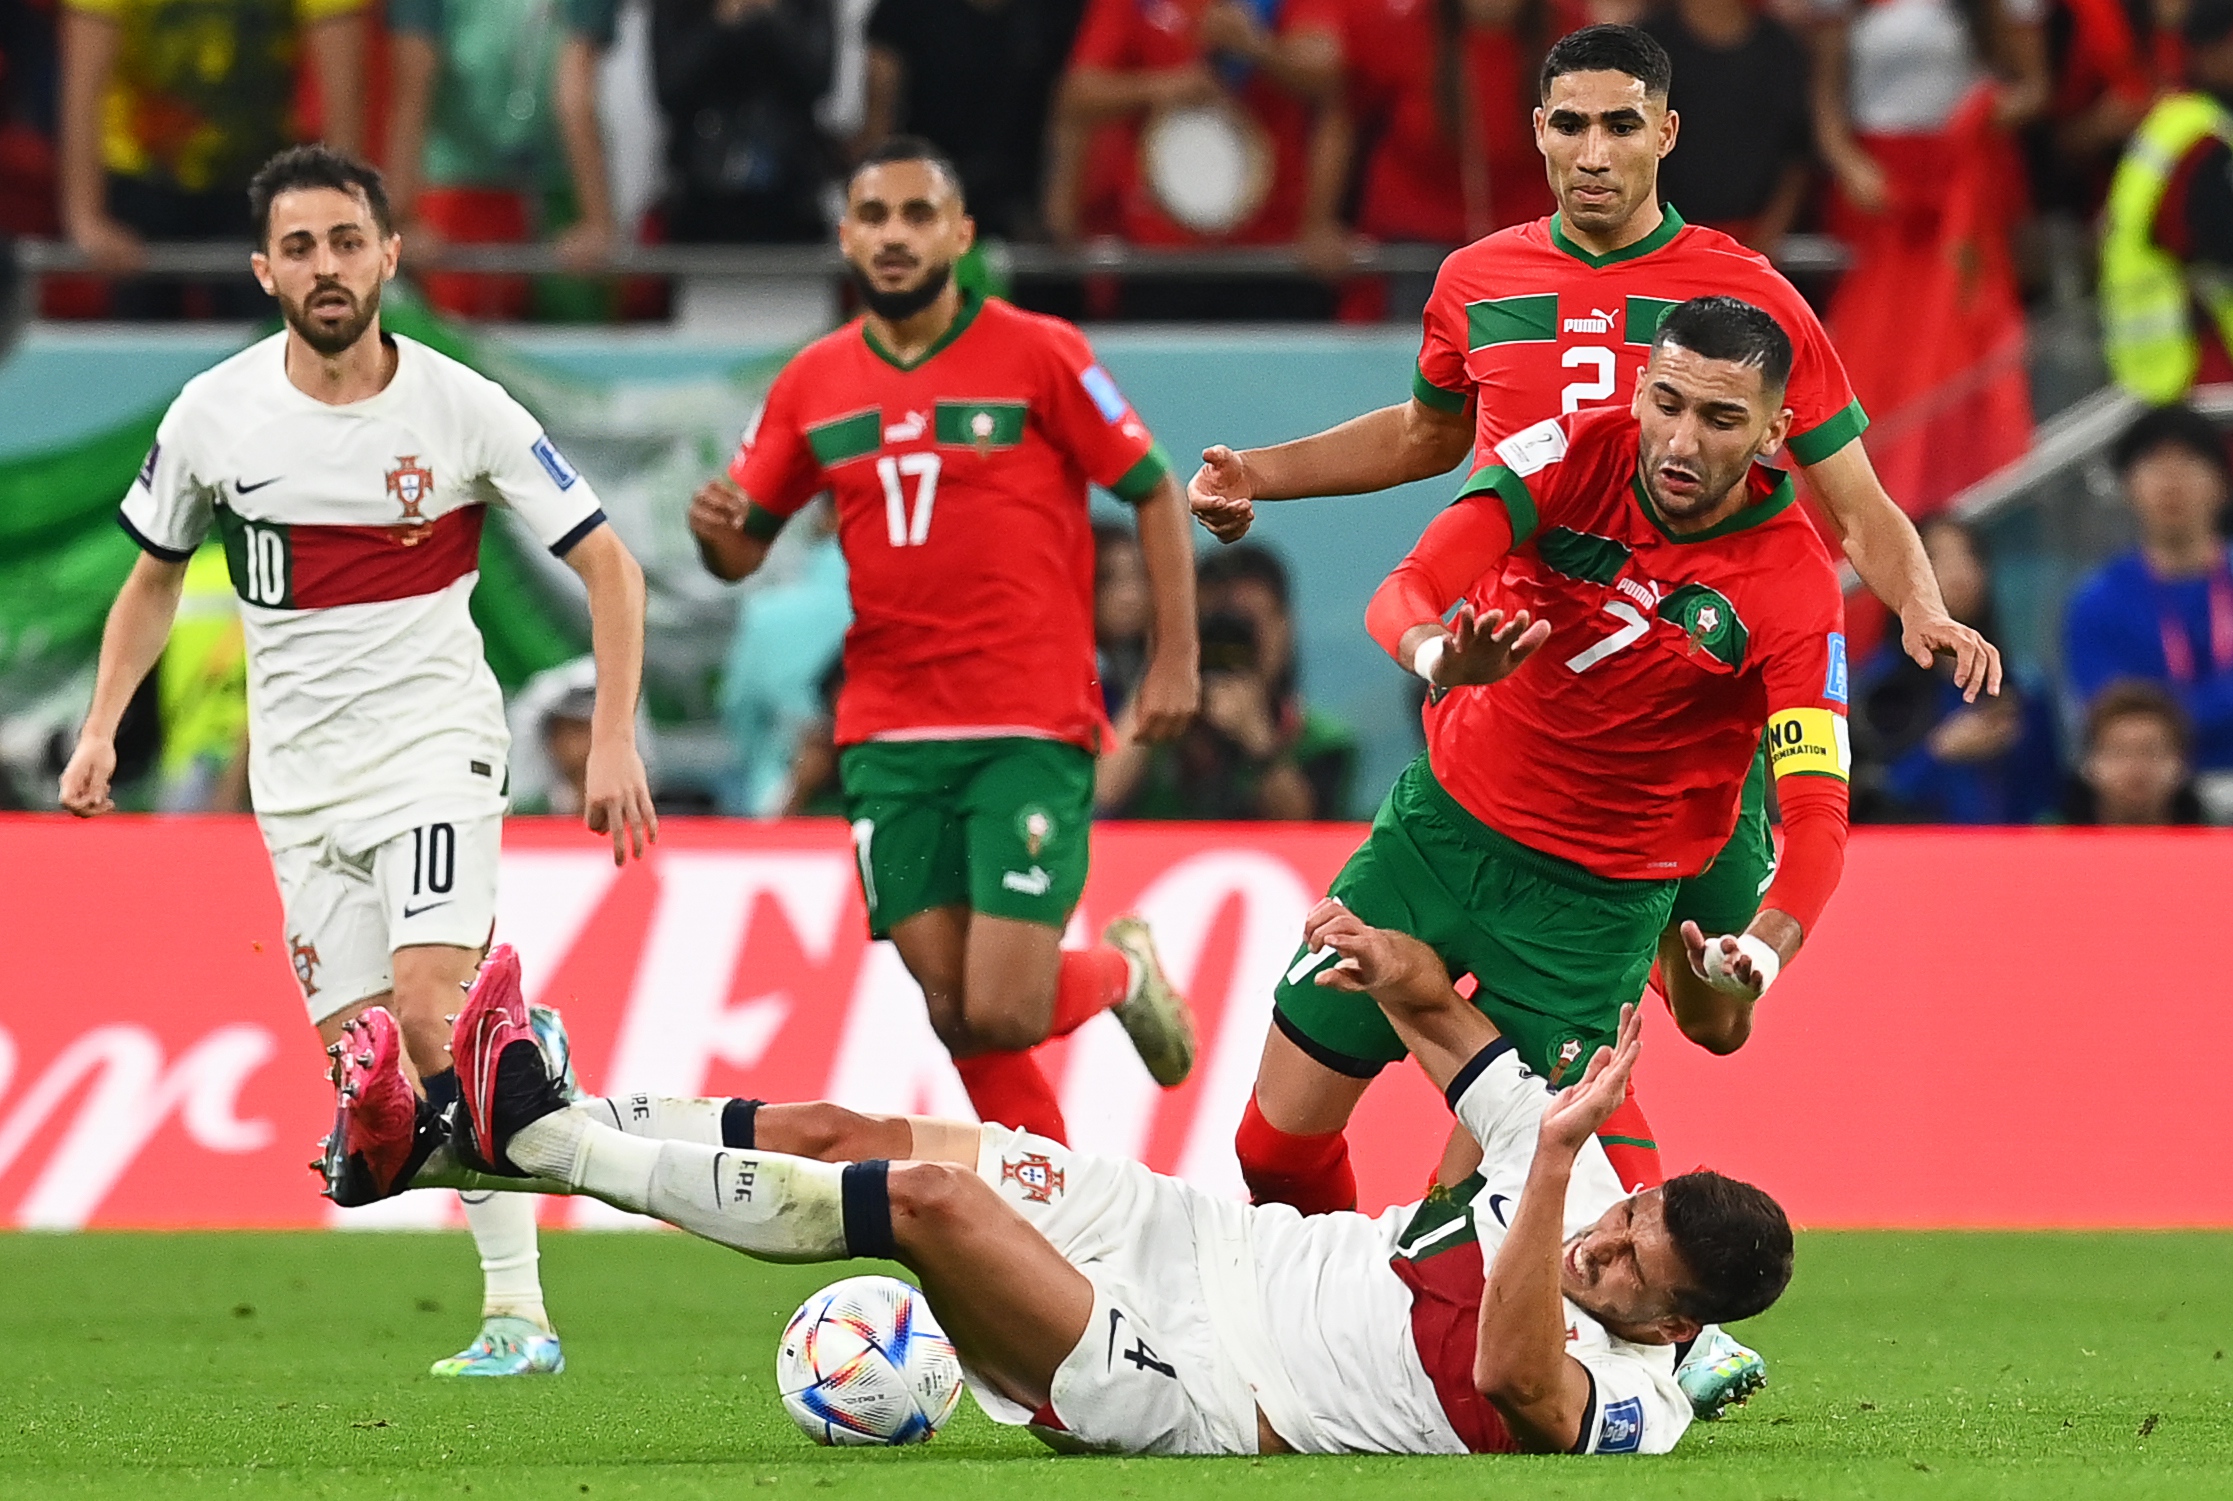 Fudbalska reprezentacija Maroka